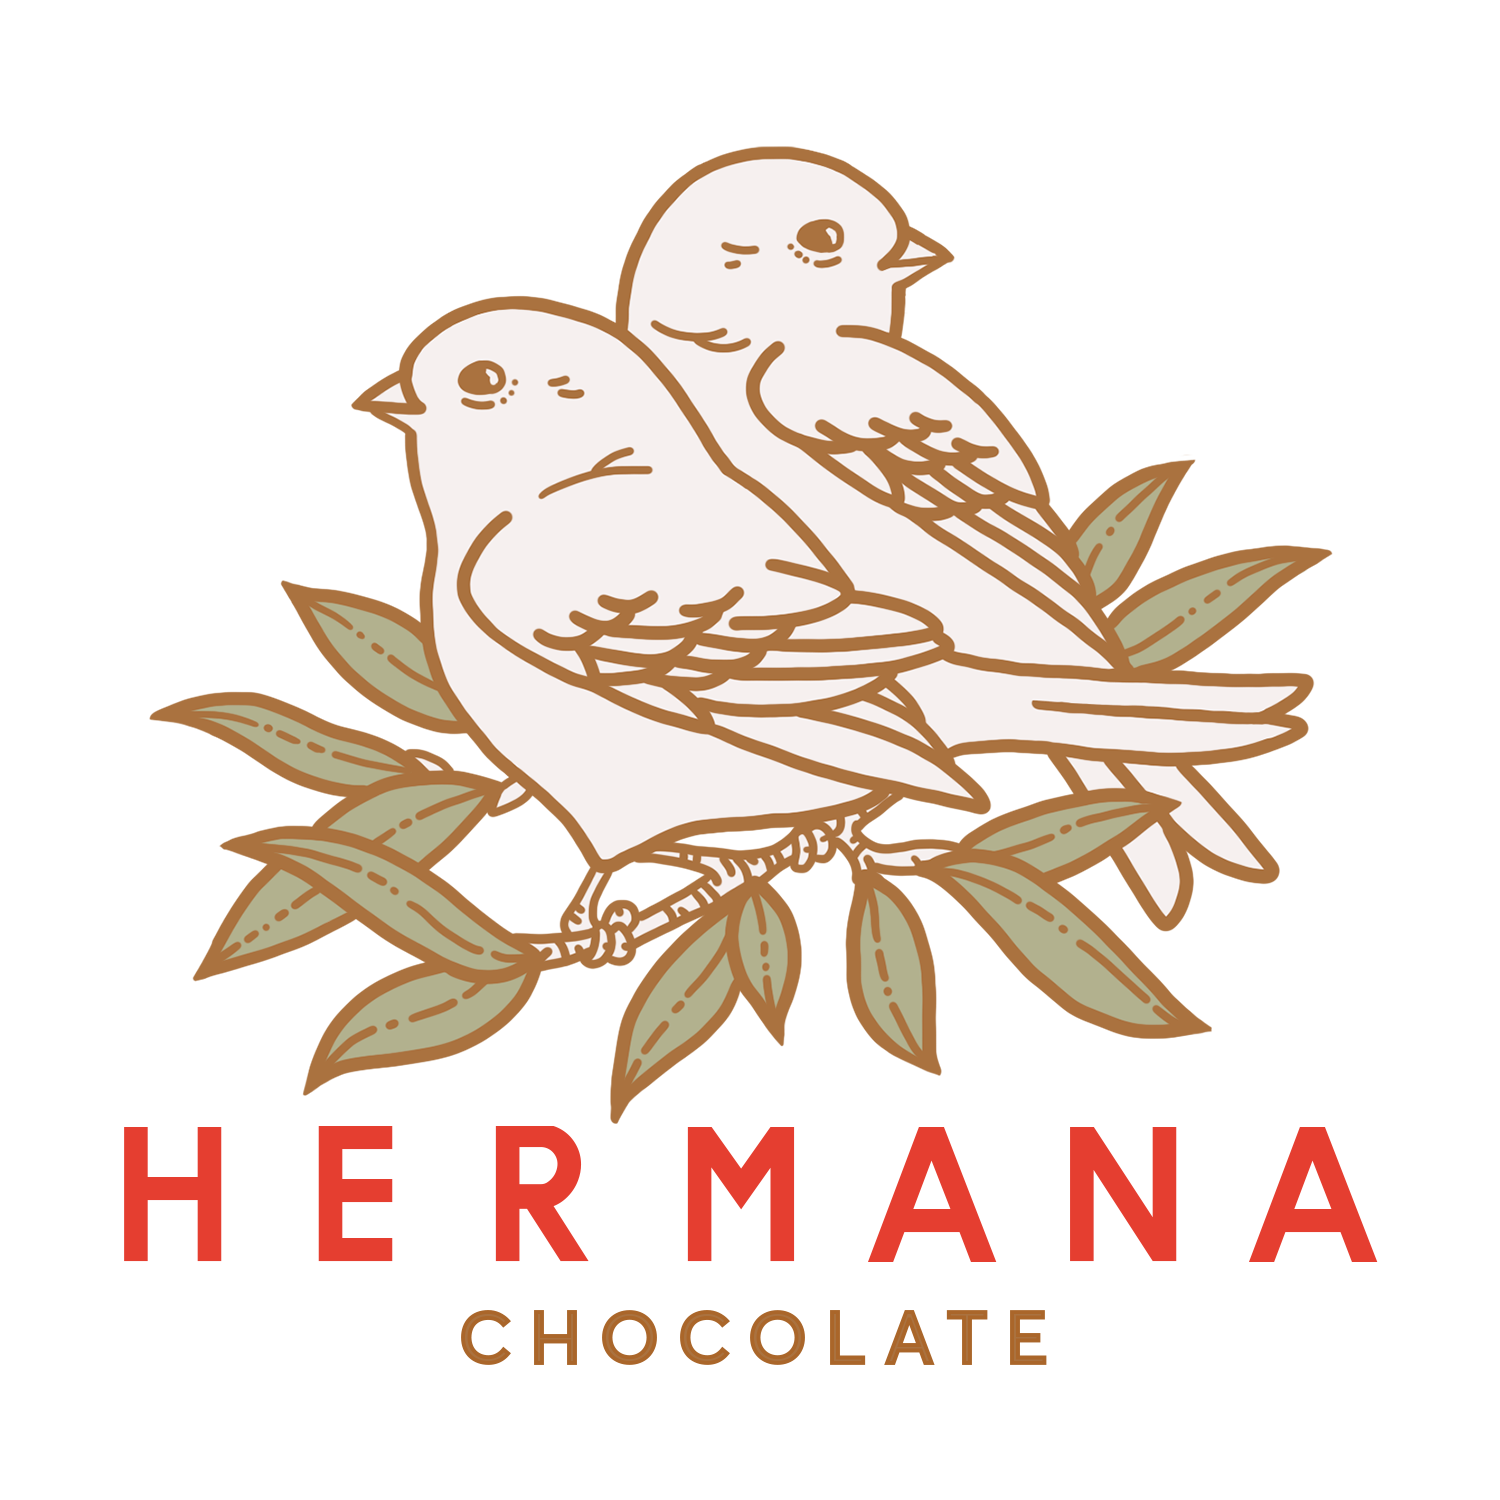 Hermana Chocolate